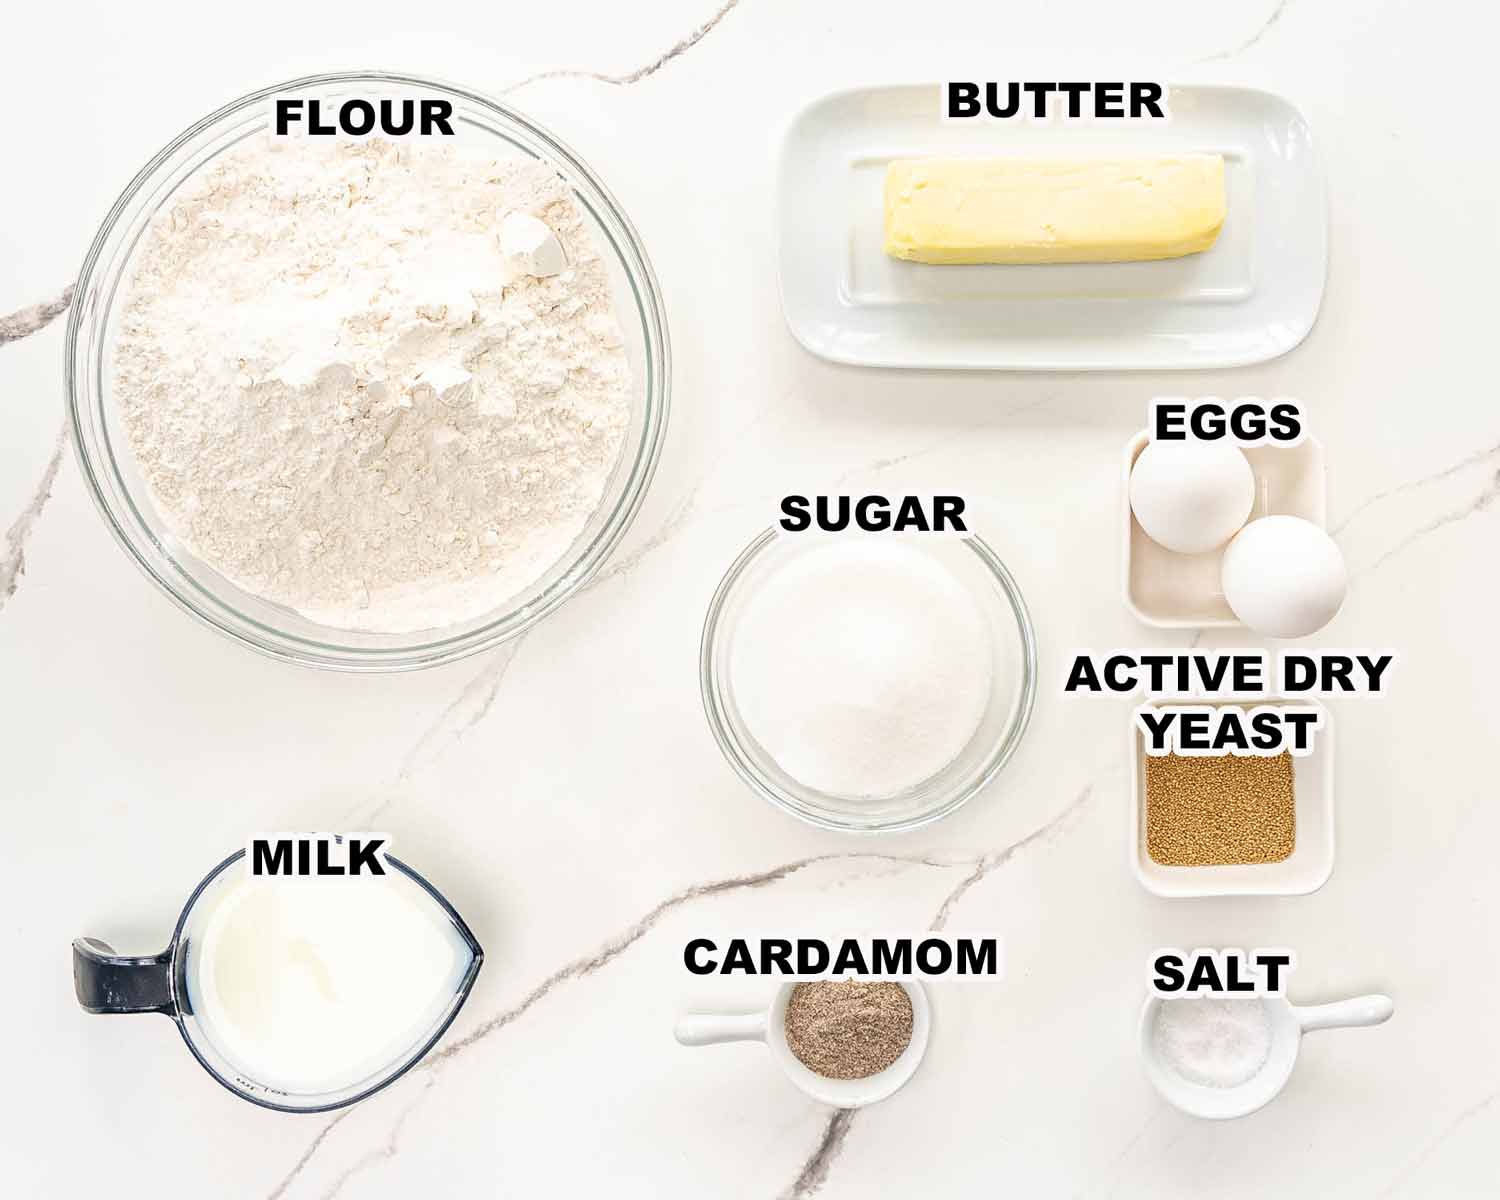 ingredients needed to make finnish cardamom rolls.